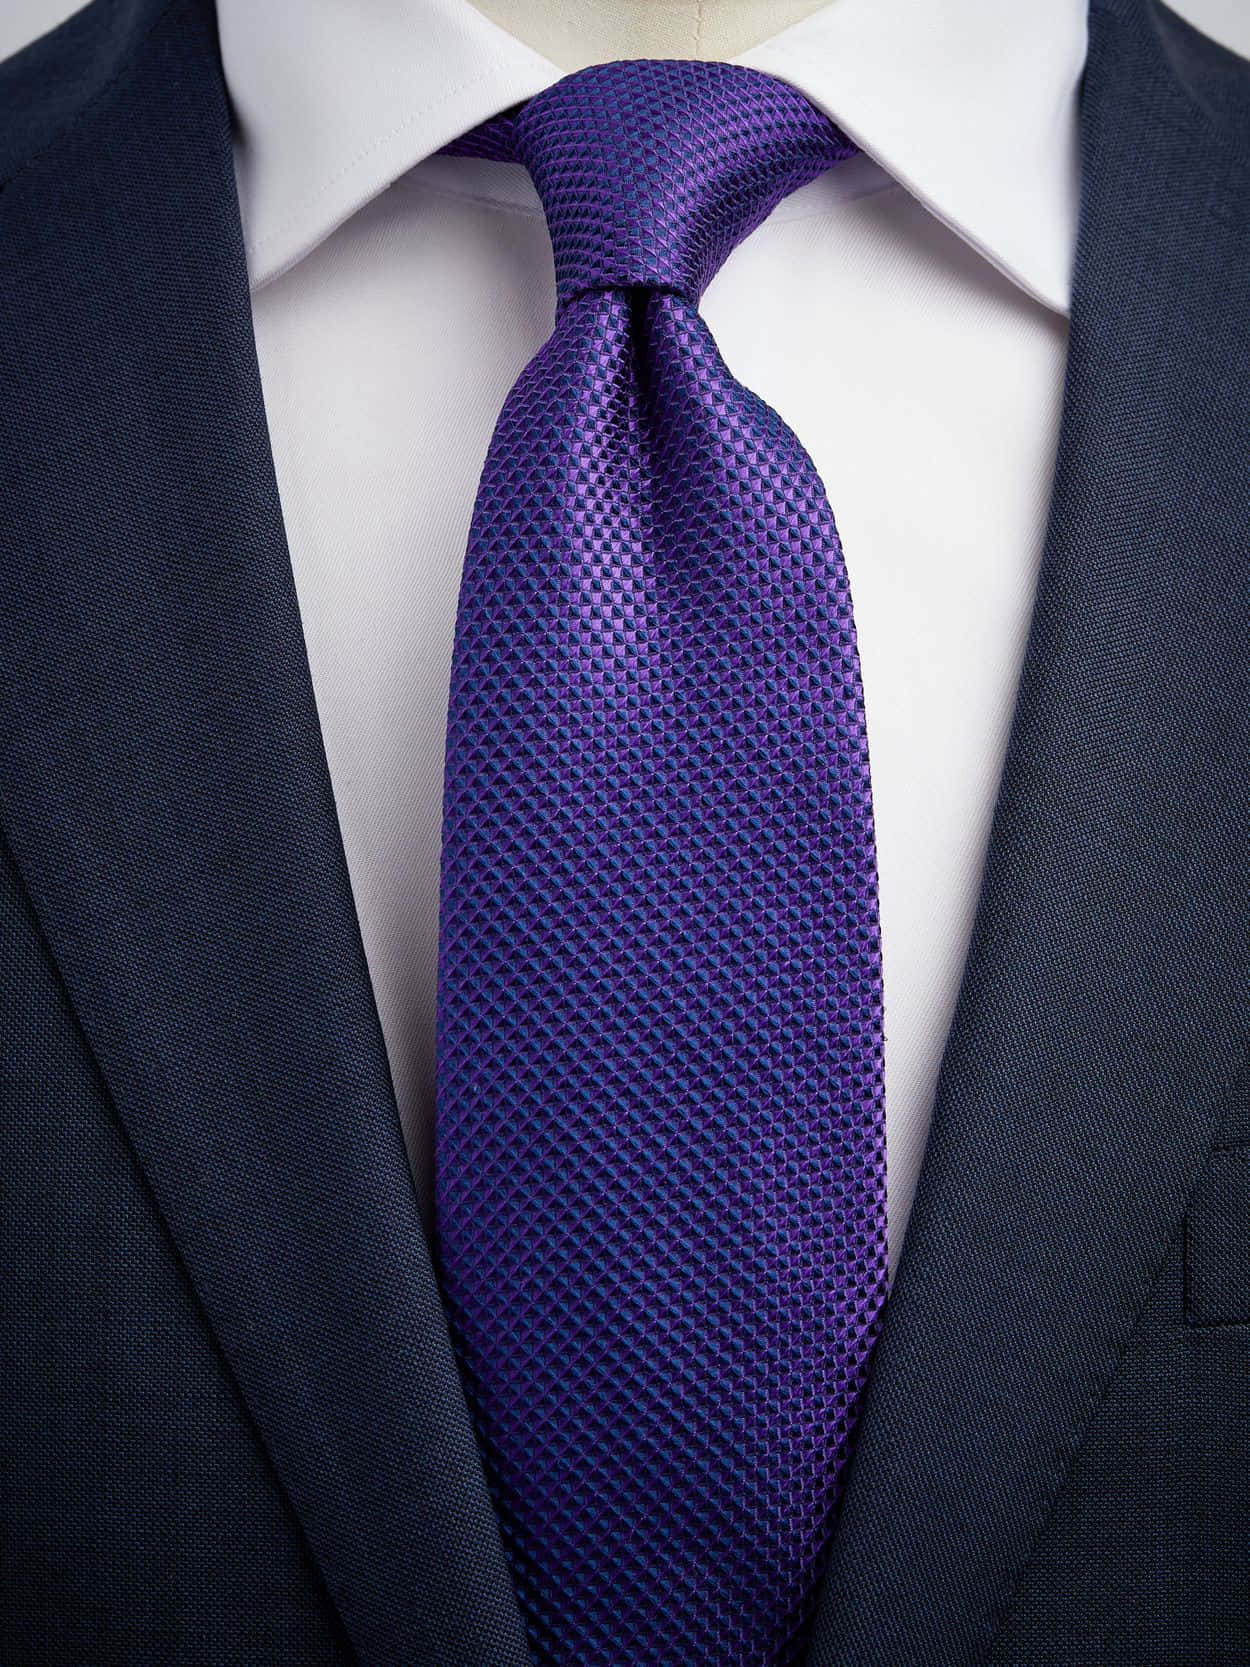 Elegant Man In Purple Tie Wallpaper